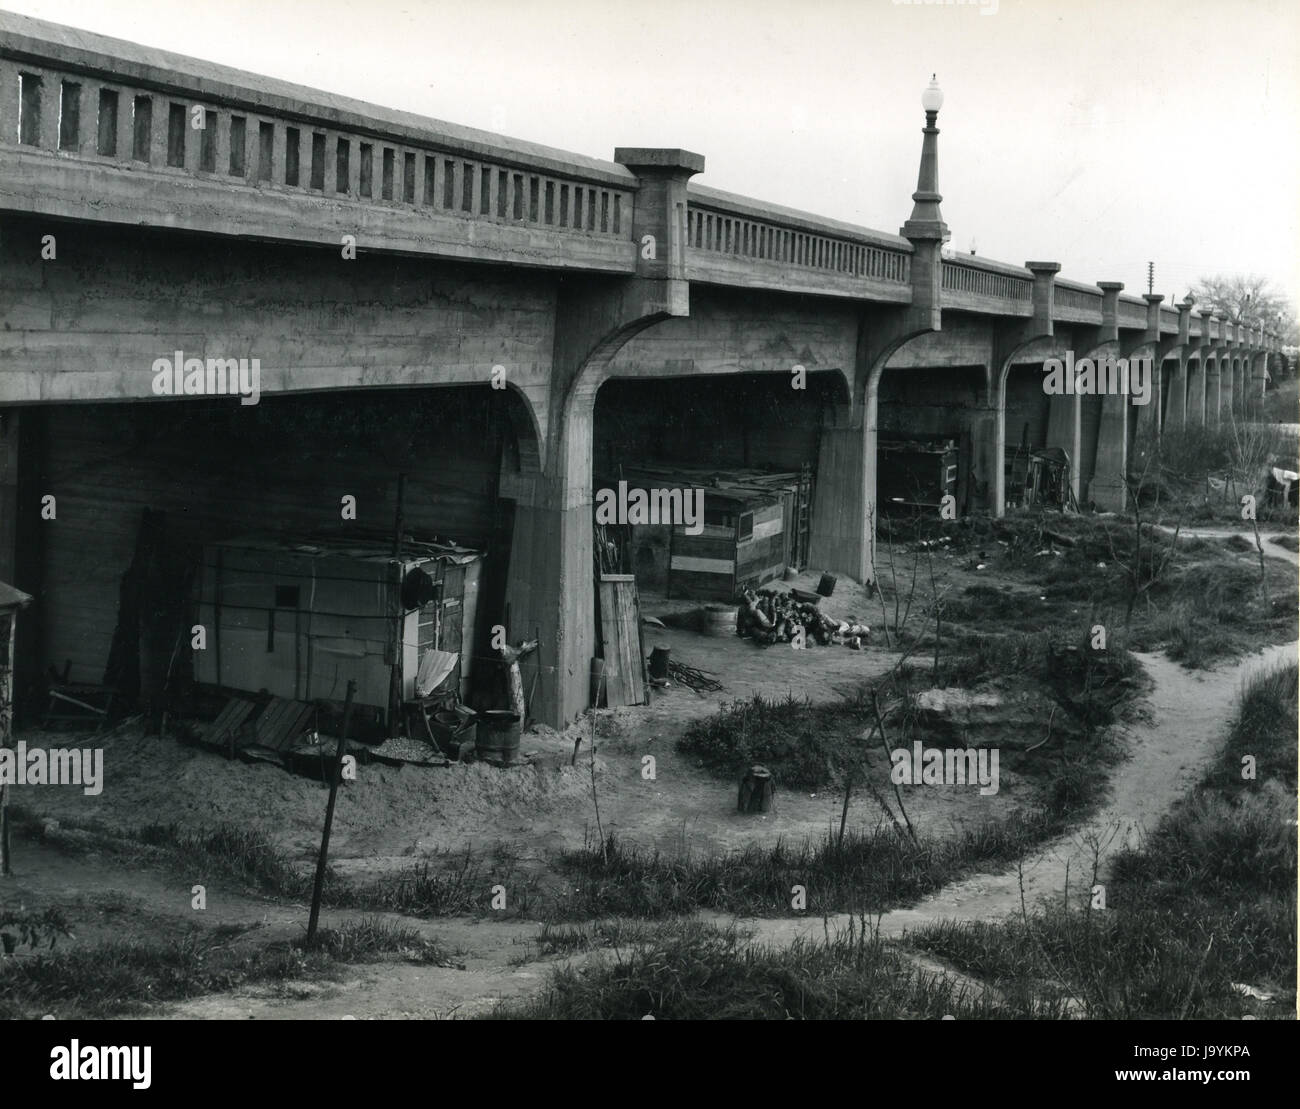 Marysville, California, February 20, 1940 - Squatter shacks under the D Street Bridge during the Great Depression. Photo by Dorothea Lange Stock Photo